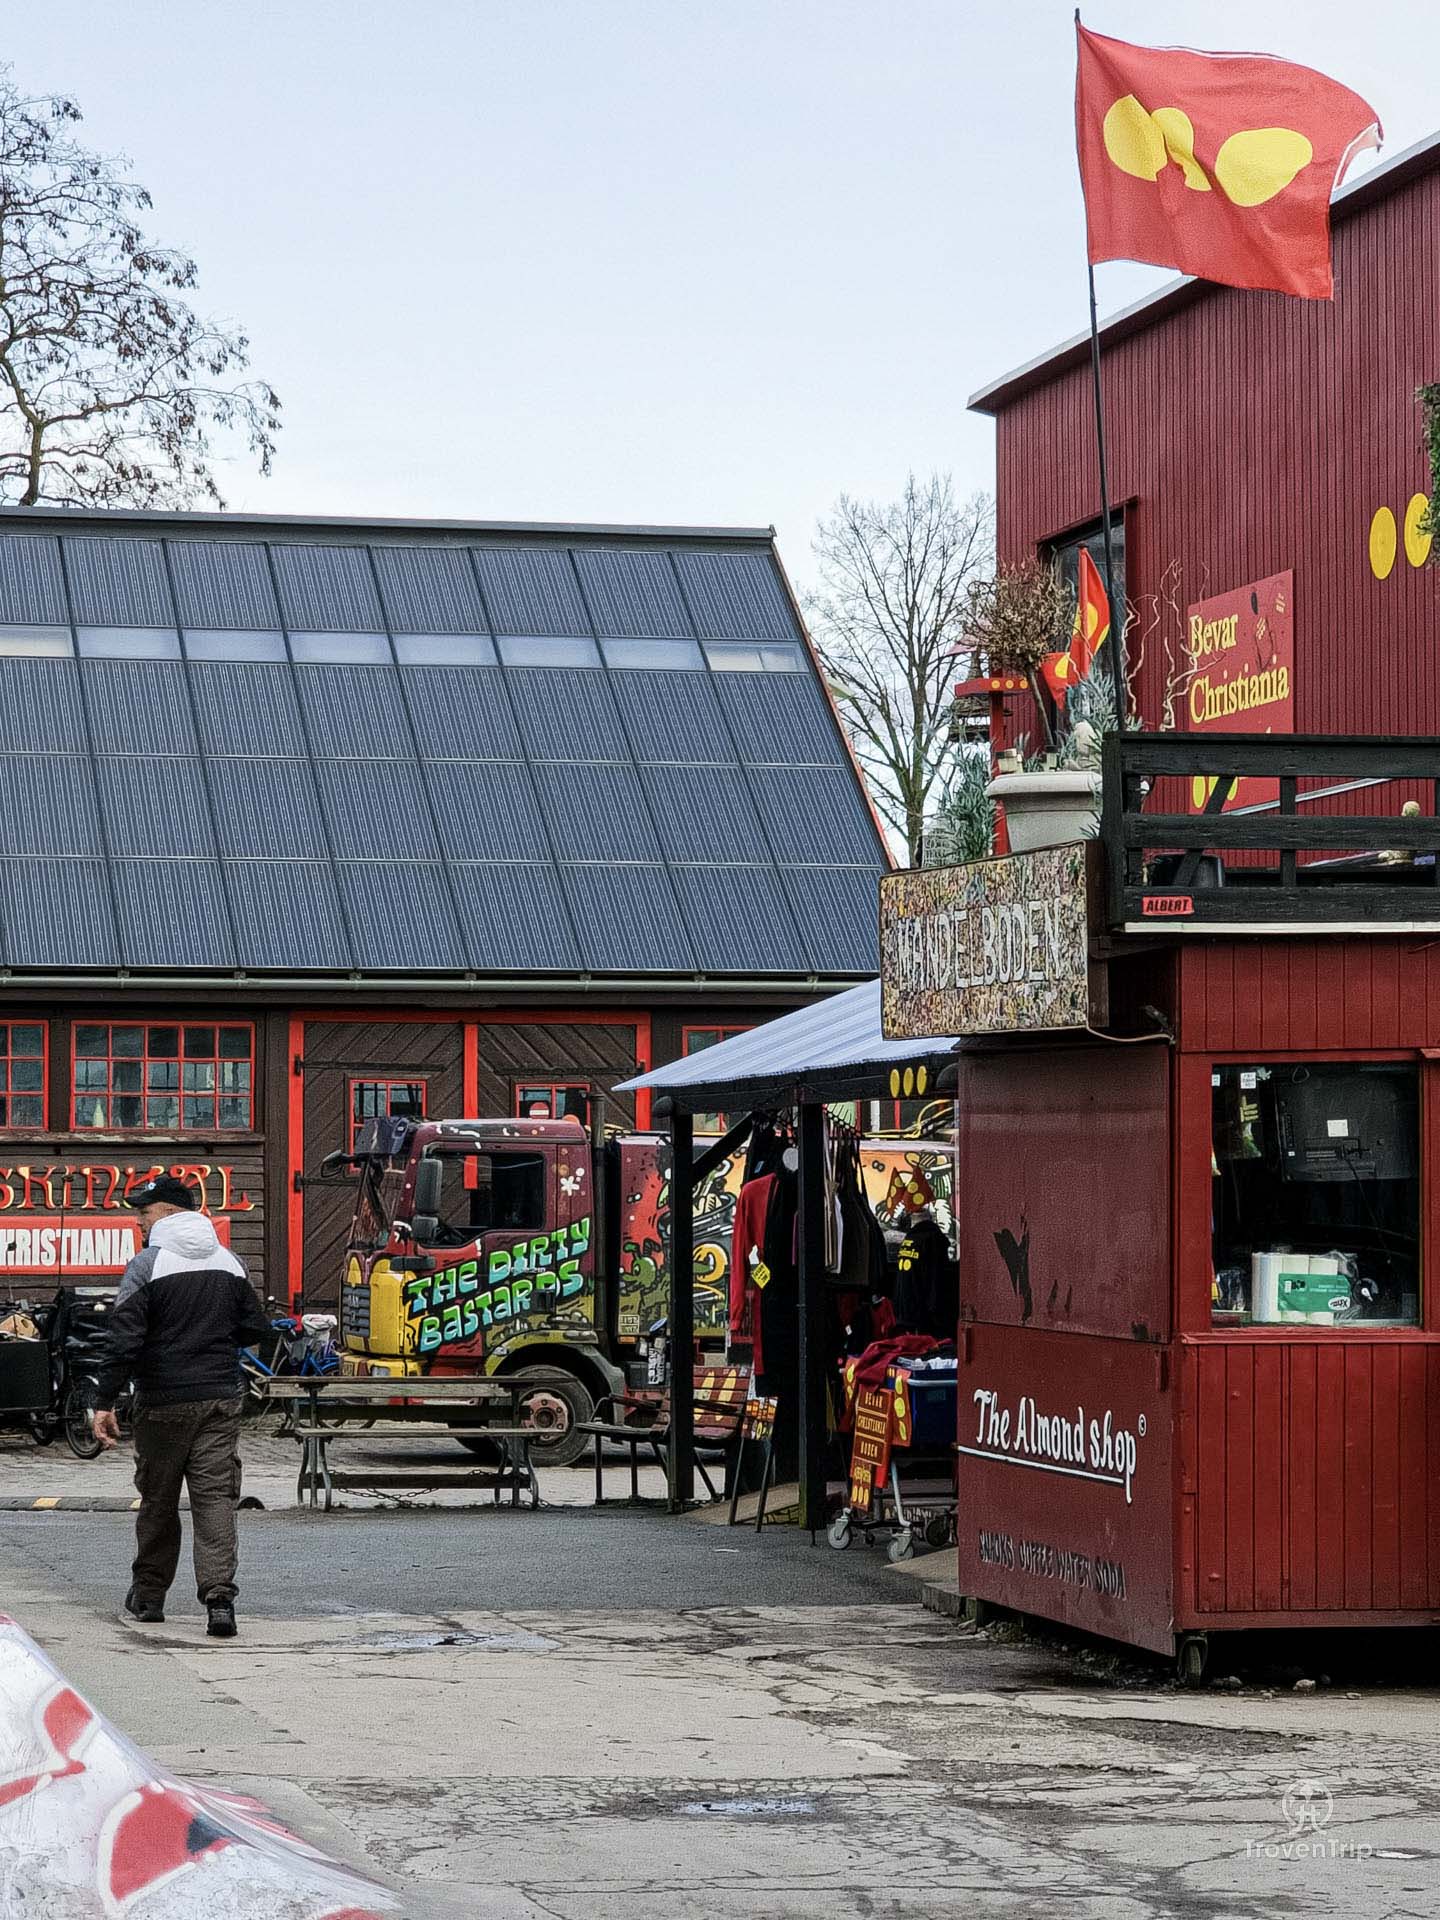 Rubbish truck in Freetown Christiania in Copenhagen